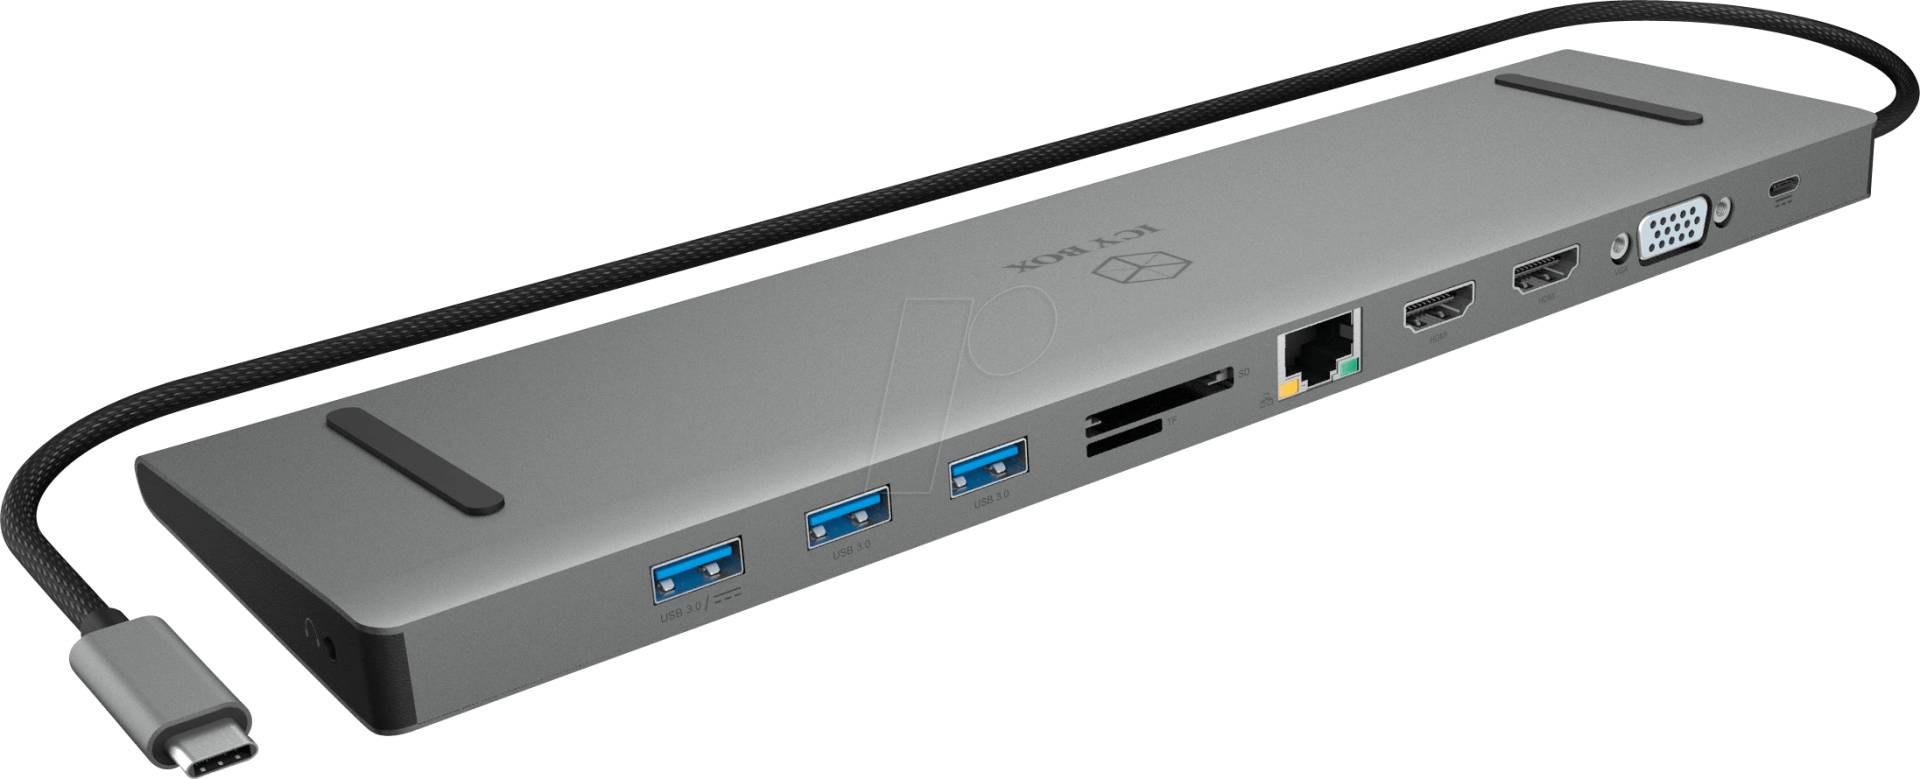 ICY IB-DK2106-C - Dockingstation/Port Replicator, USB Type-C, Laptop von Icybox